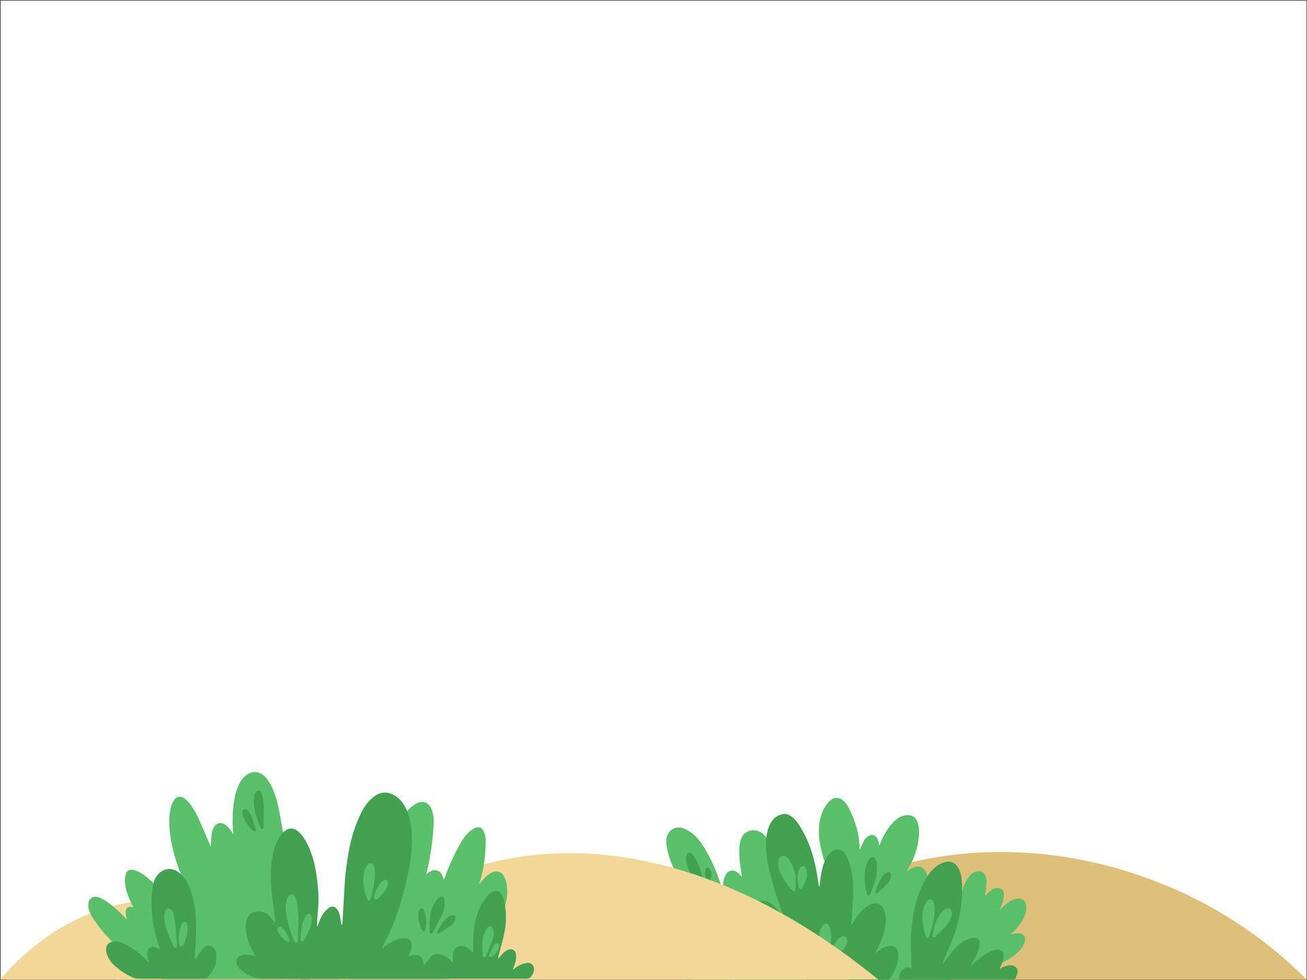 struiken gras land- achtergrond illustratie vector